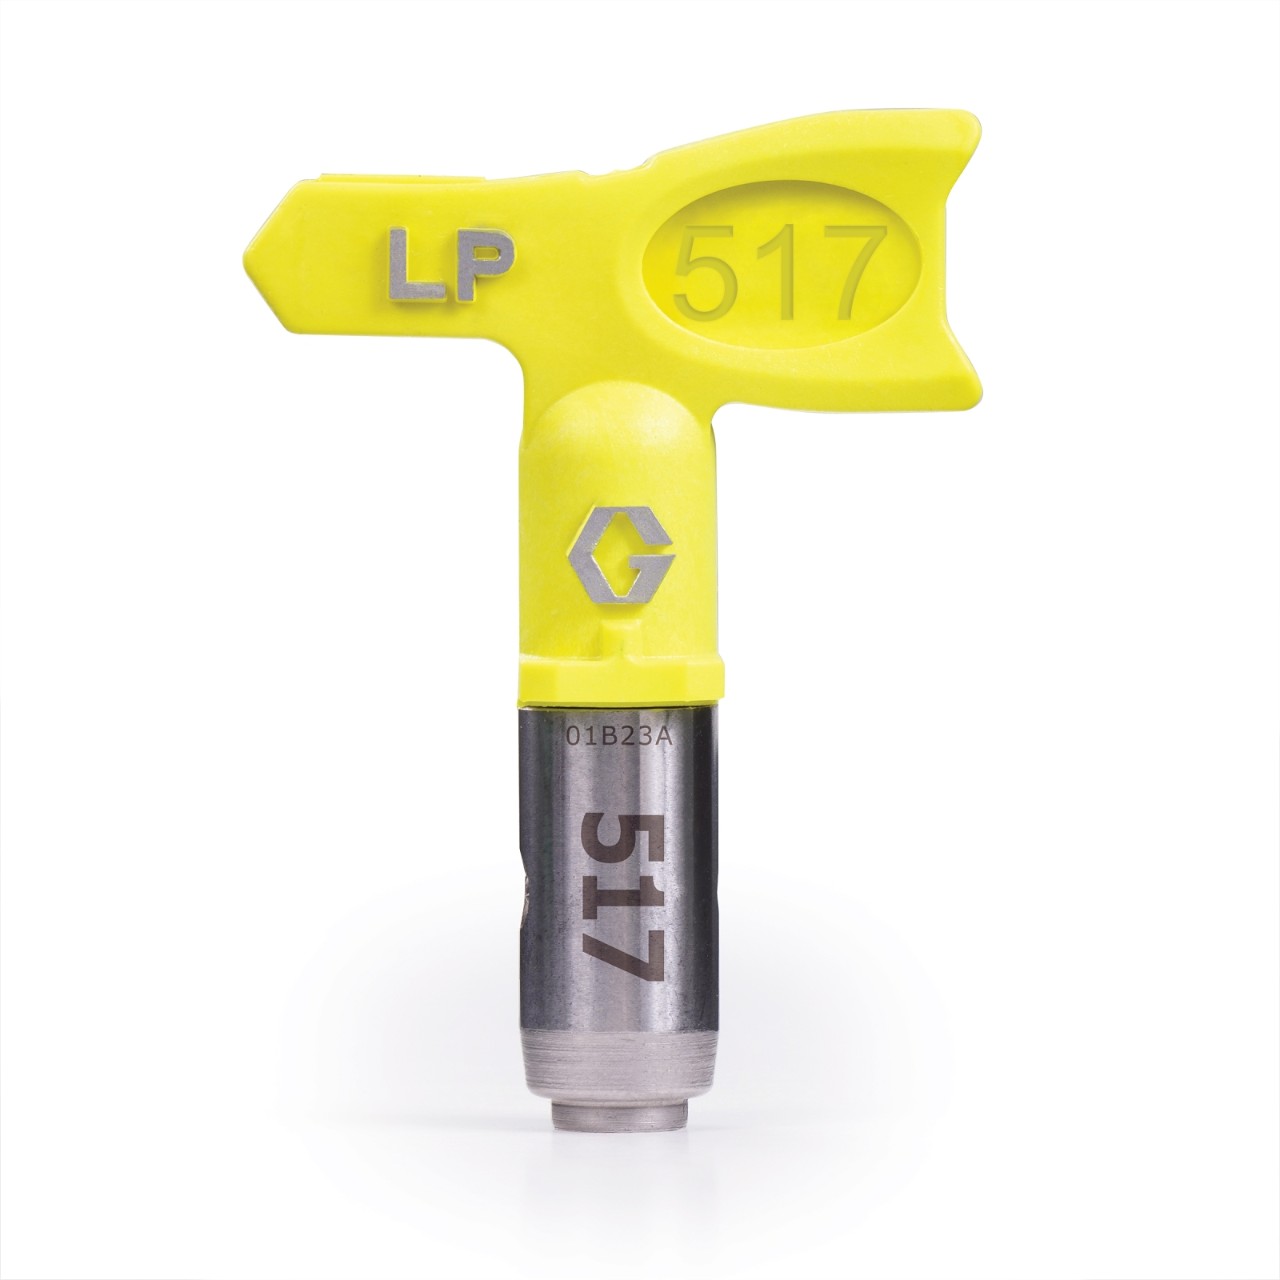 SwitchTip RAC X LP basse pression, 517 LP517 -Graco